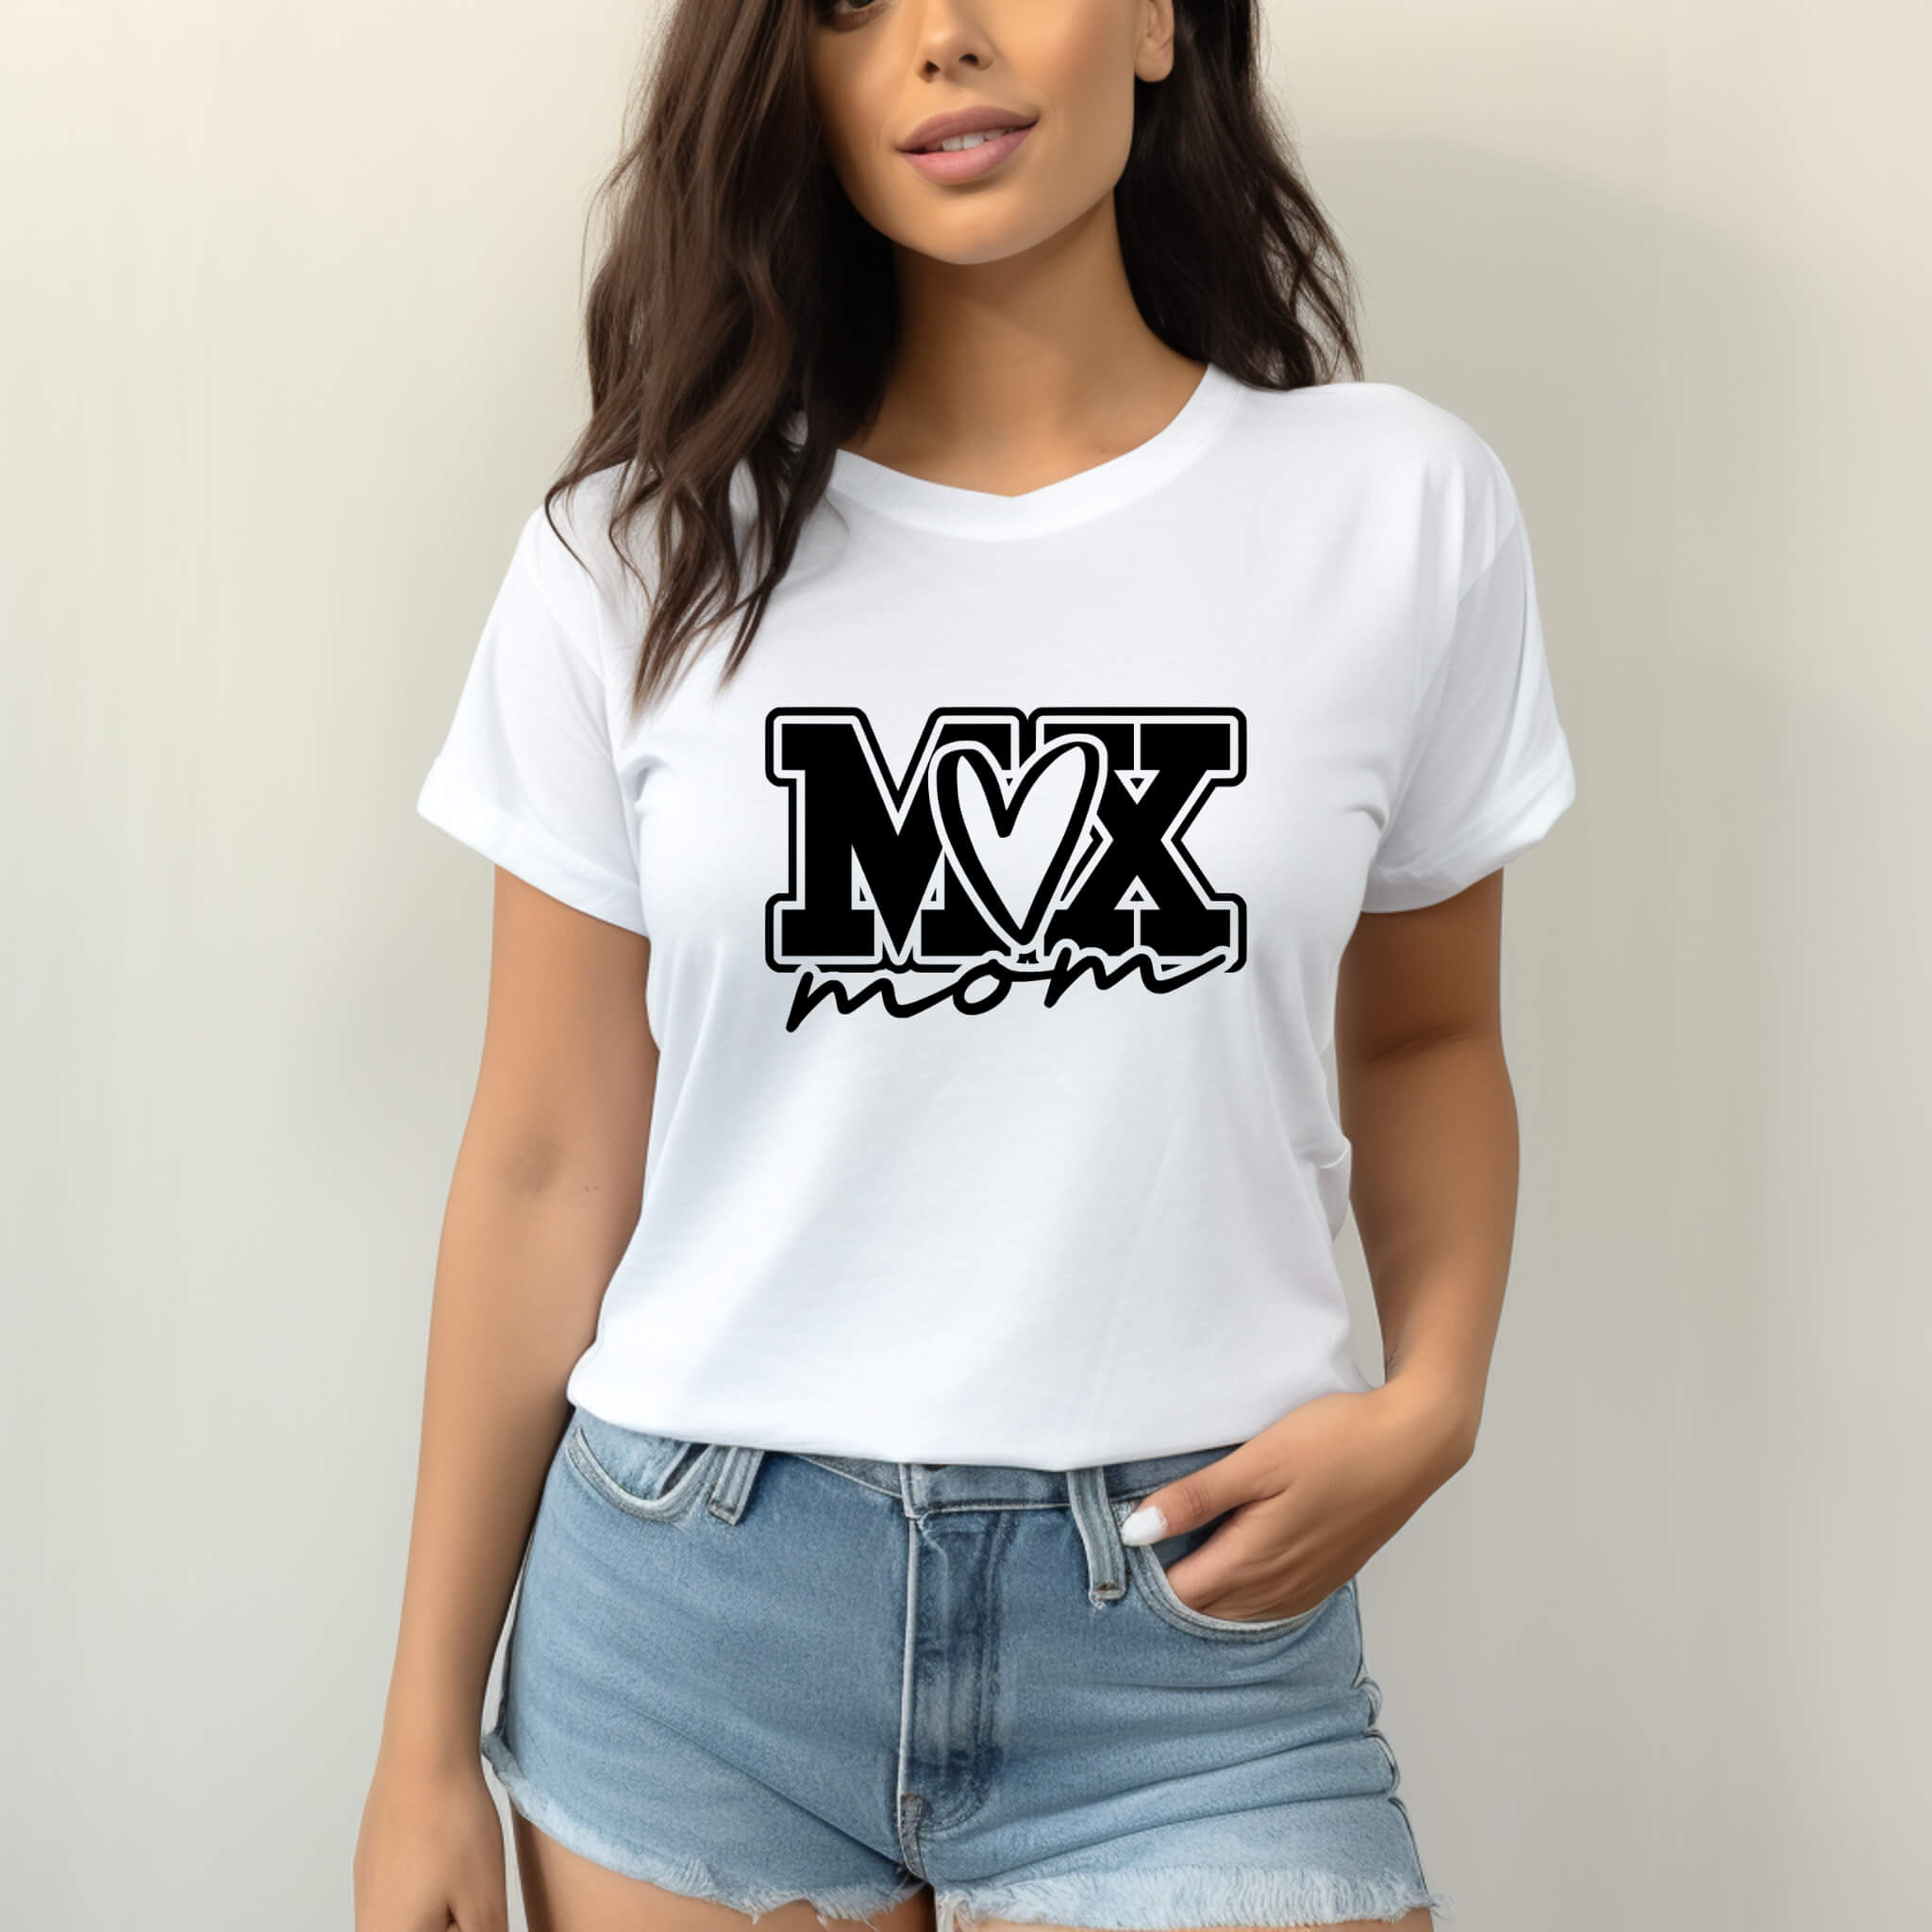 Racing - MX Mom Motocross Dirt Bike Graphic Print Women’s T-Shirt